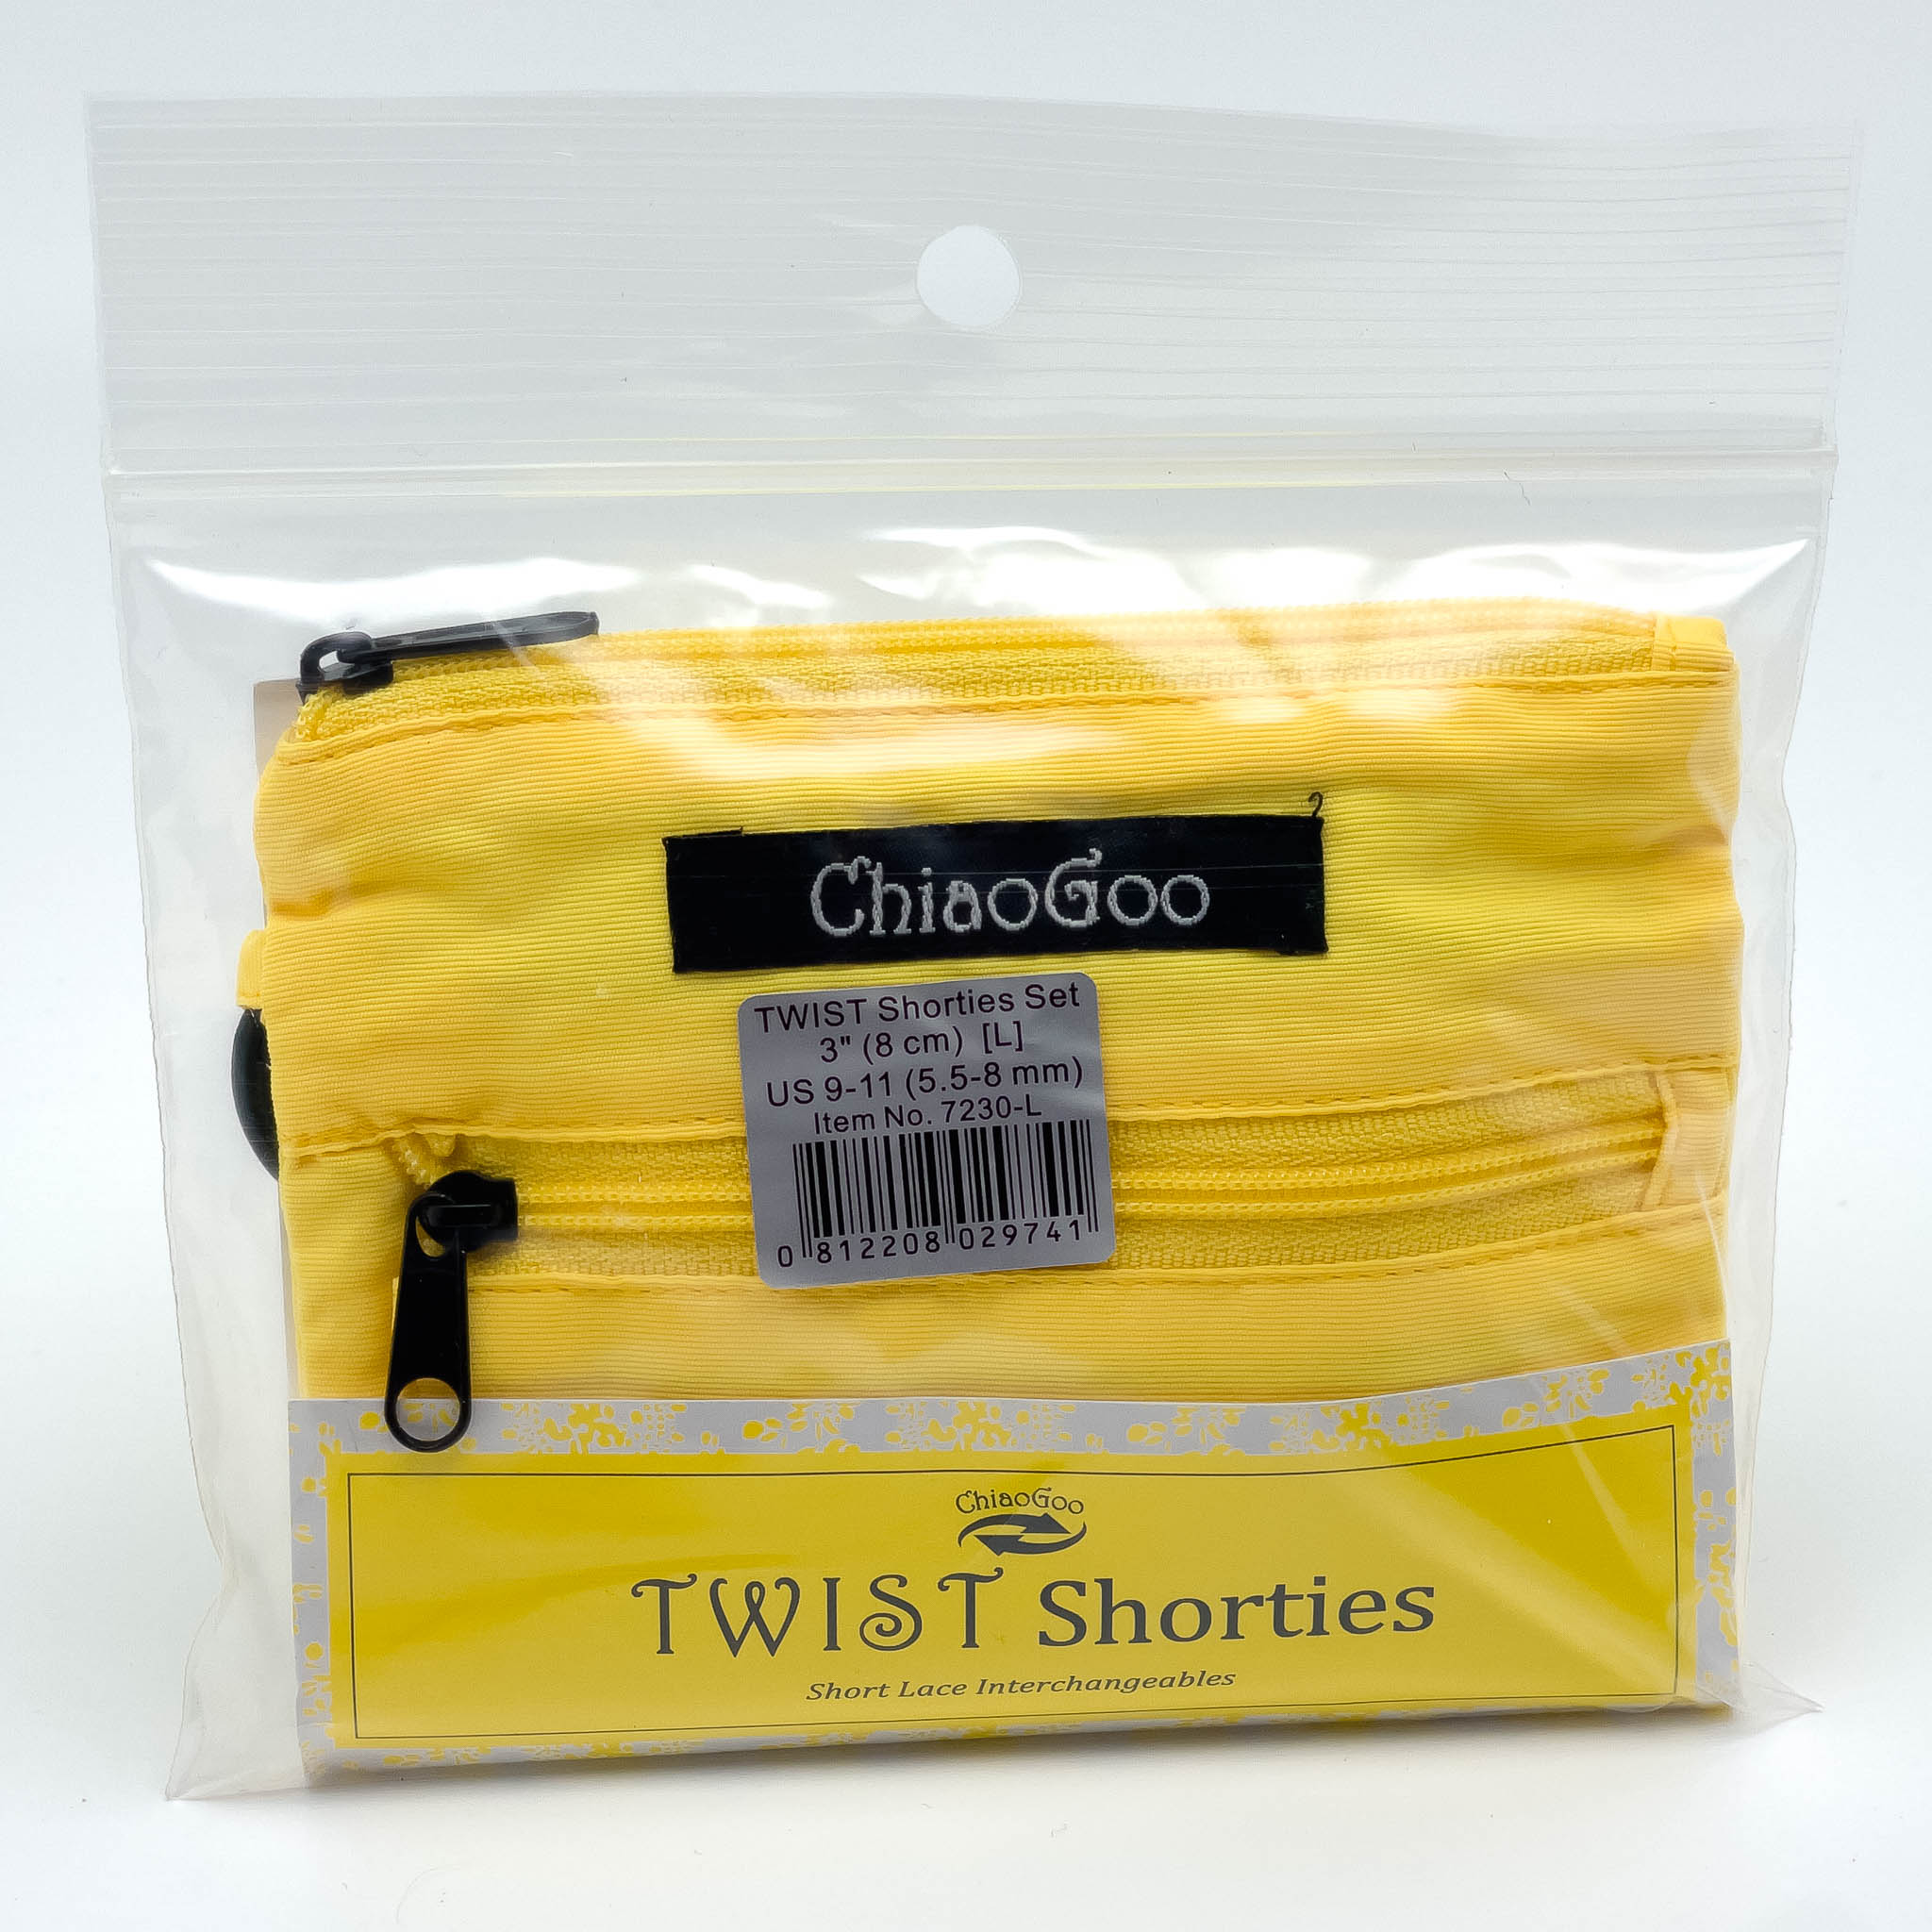 Chiaogoo TWIST Shorties Interchangeable Knitting Needles 2 & 3 Tips 